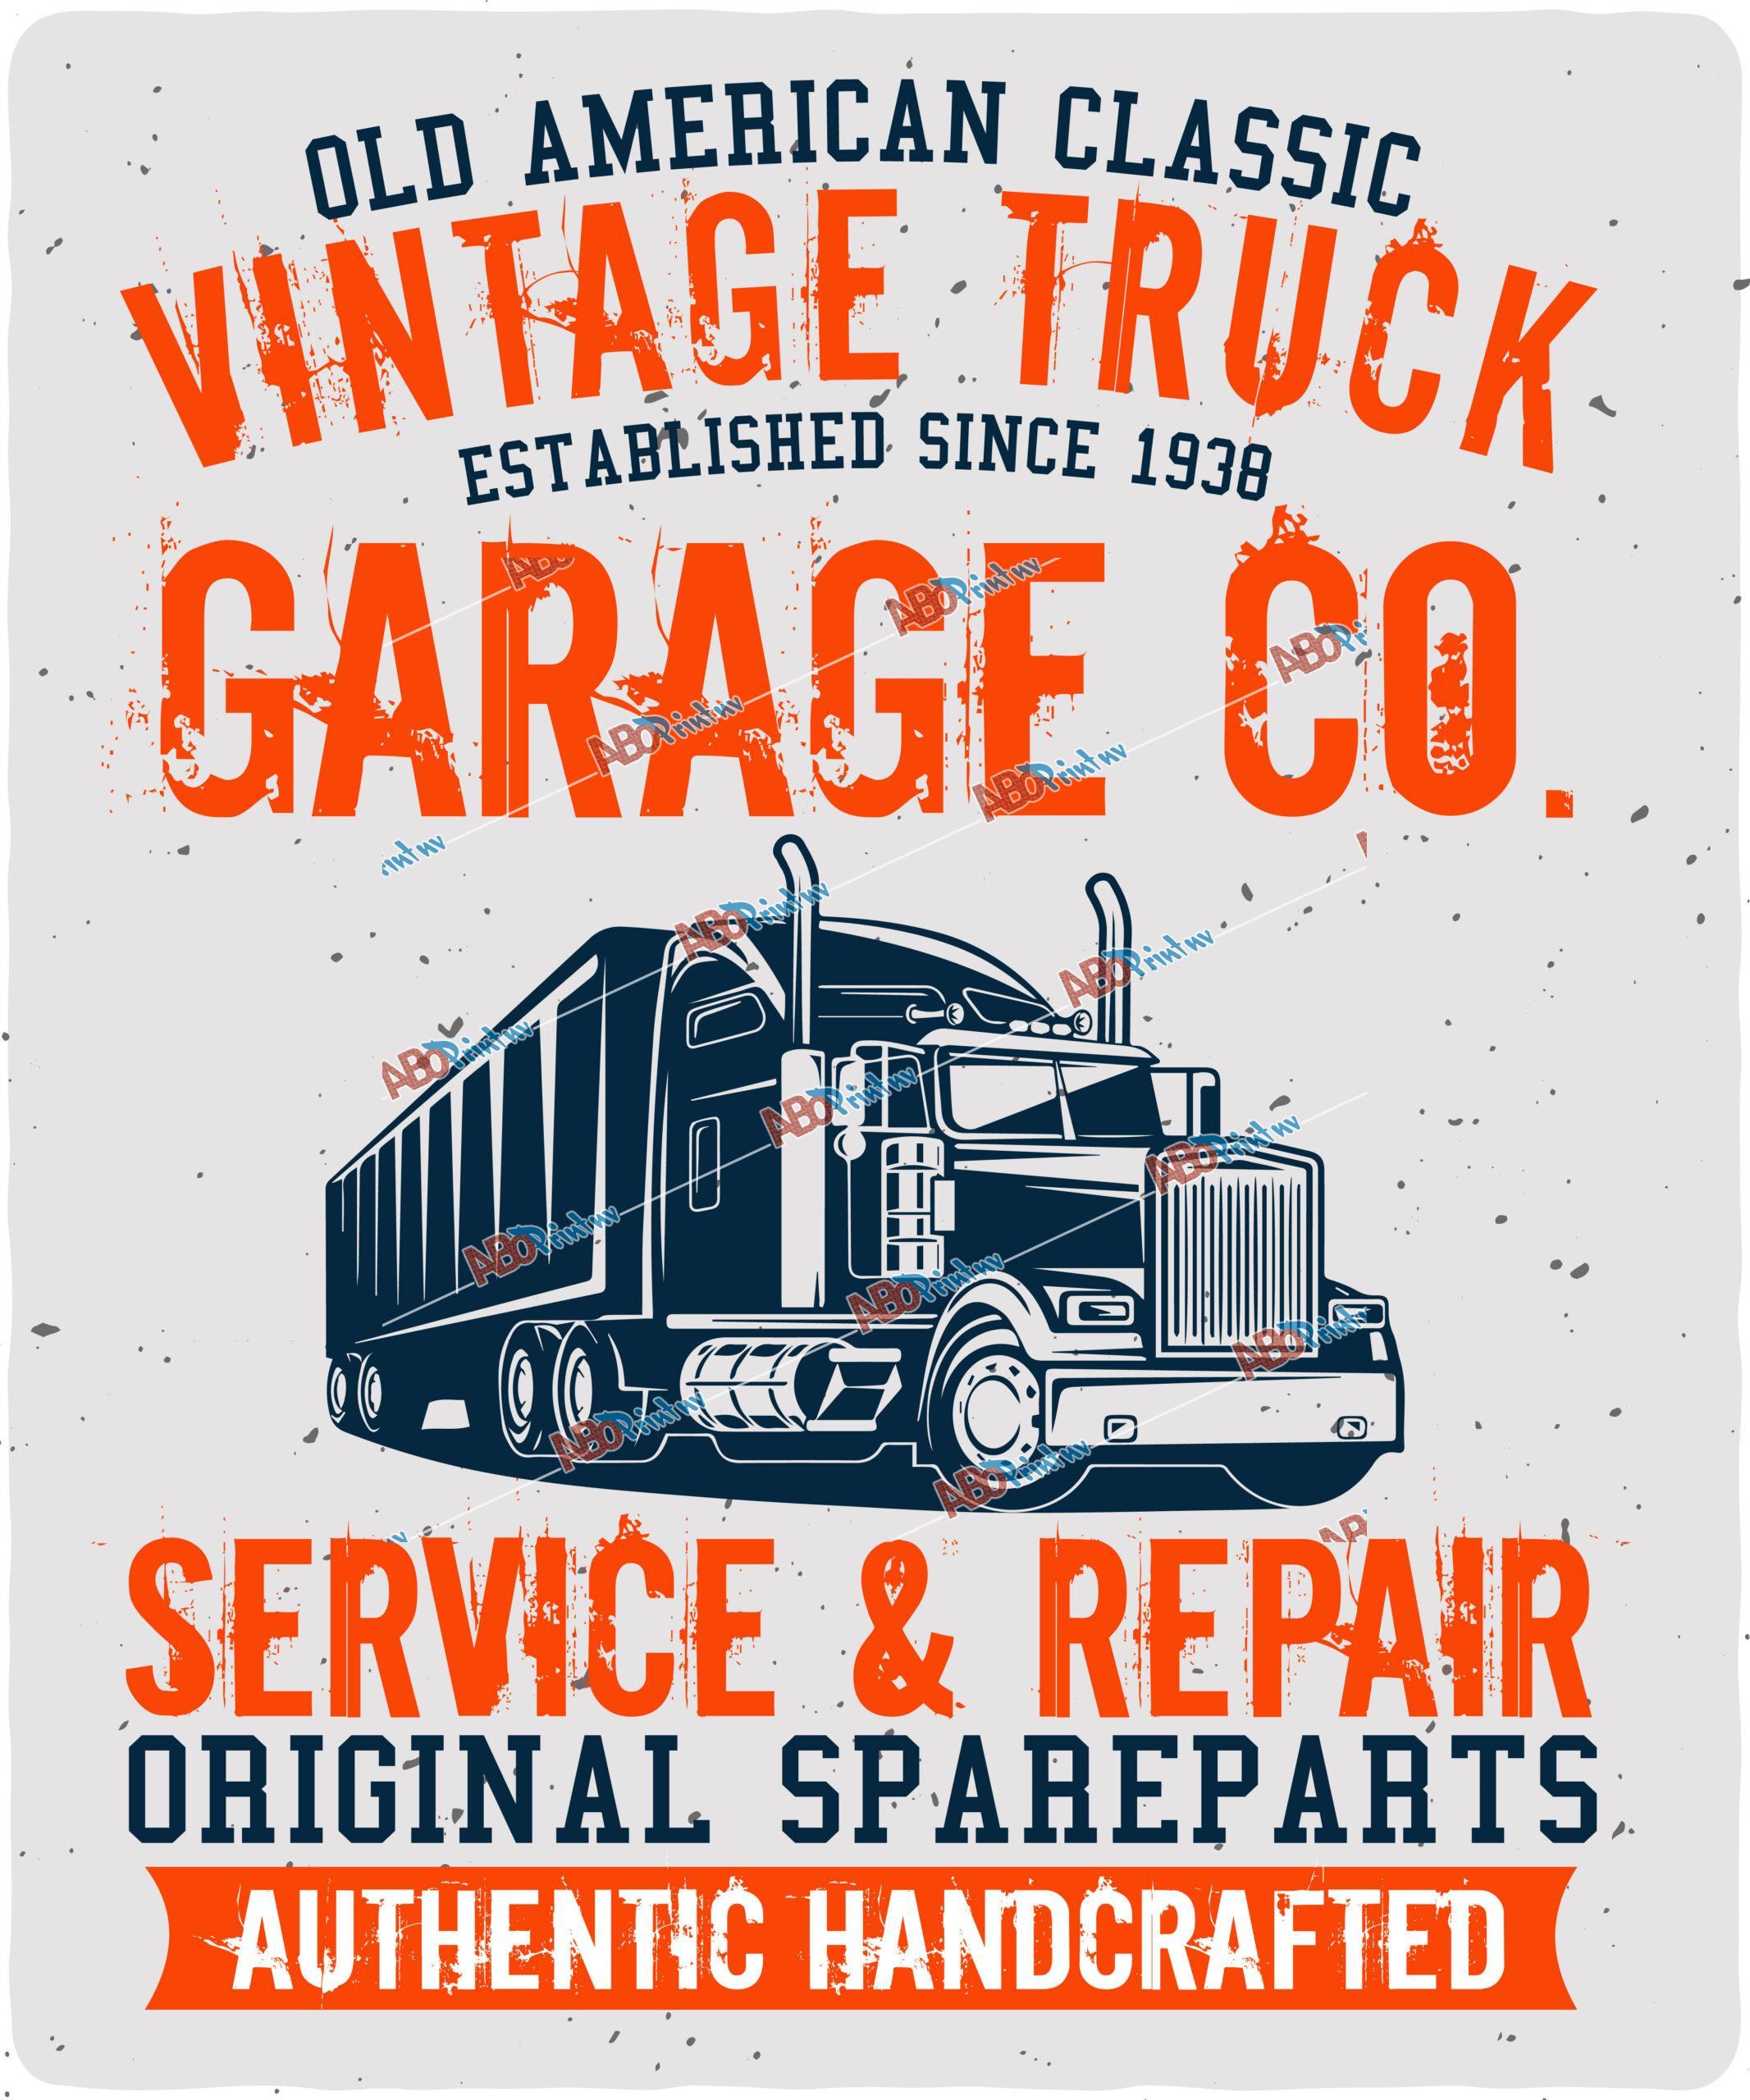 Vintage truck garage co.